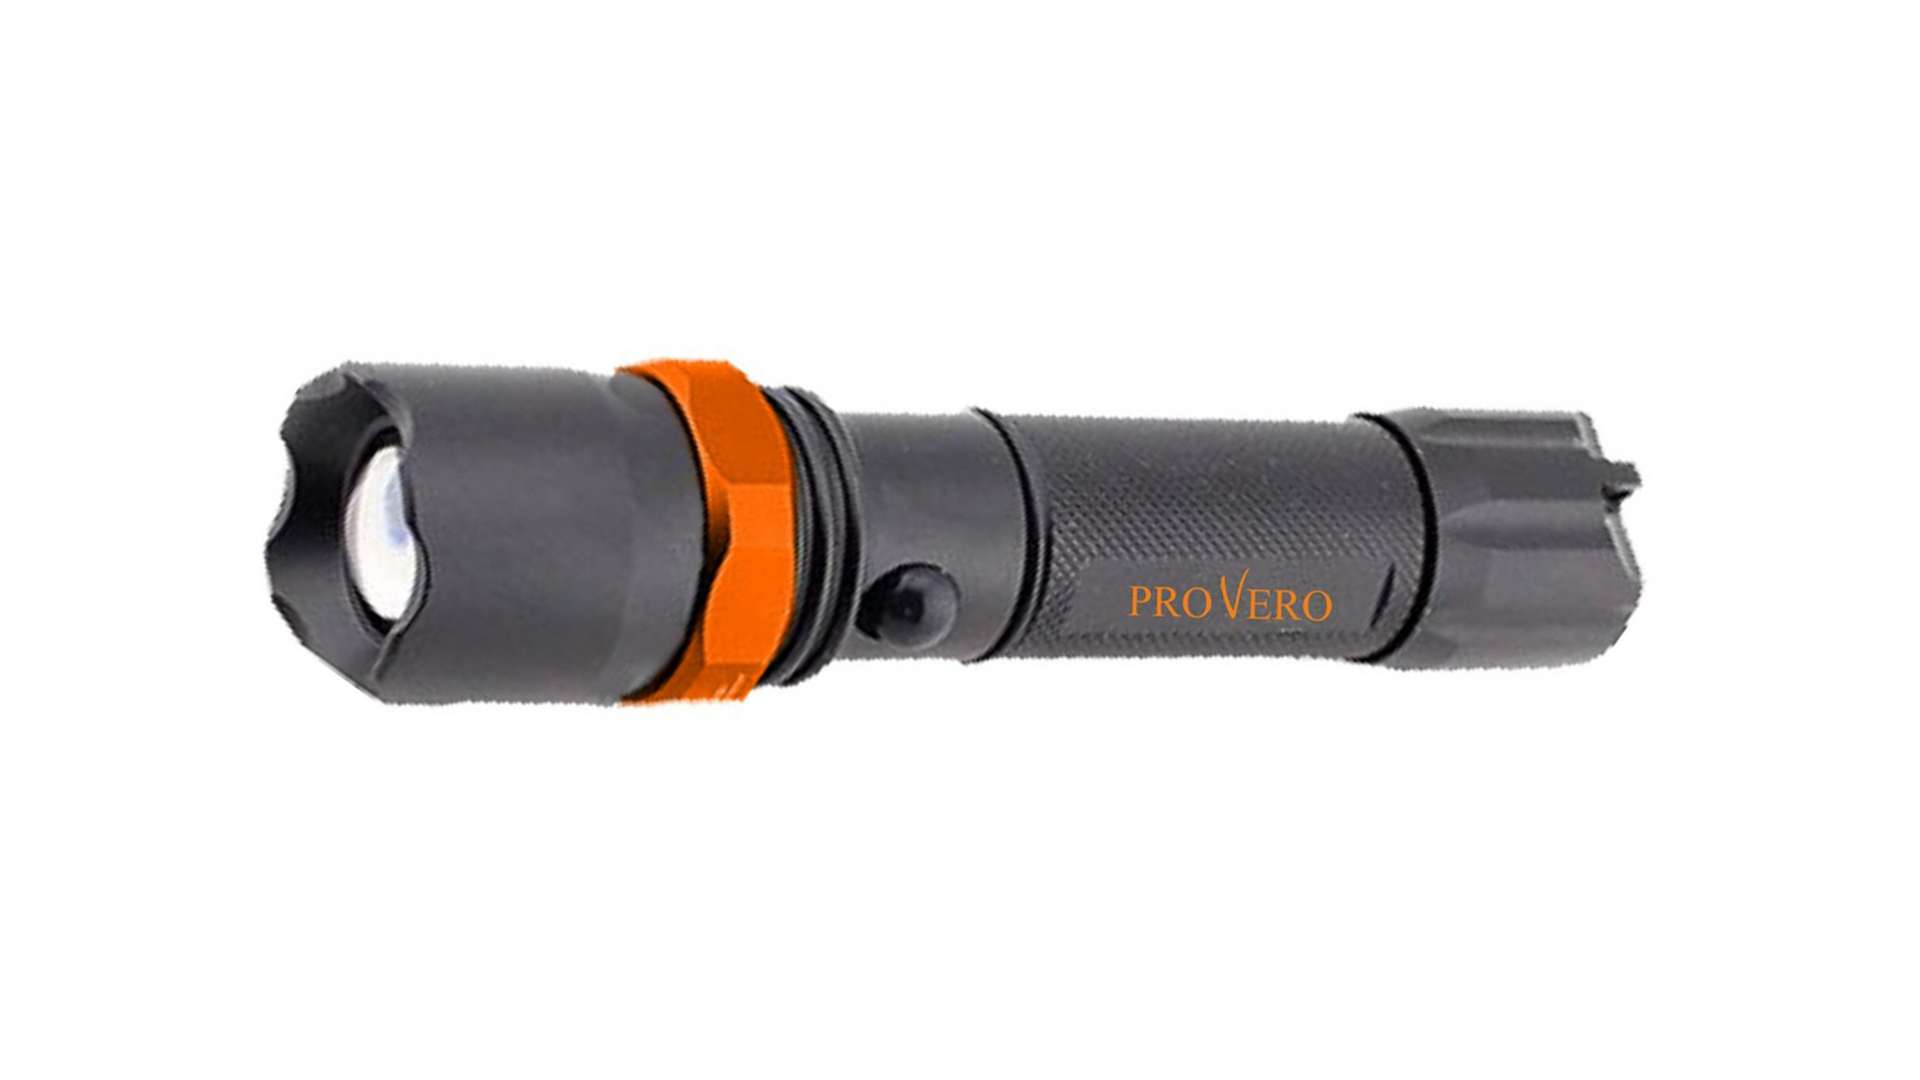 CREE XP-E 3W 150 lm LED flashlight + accessories